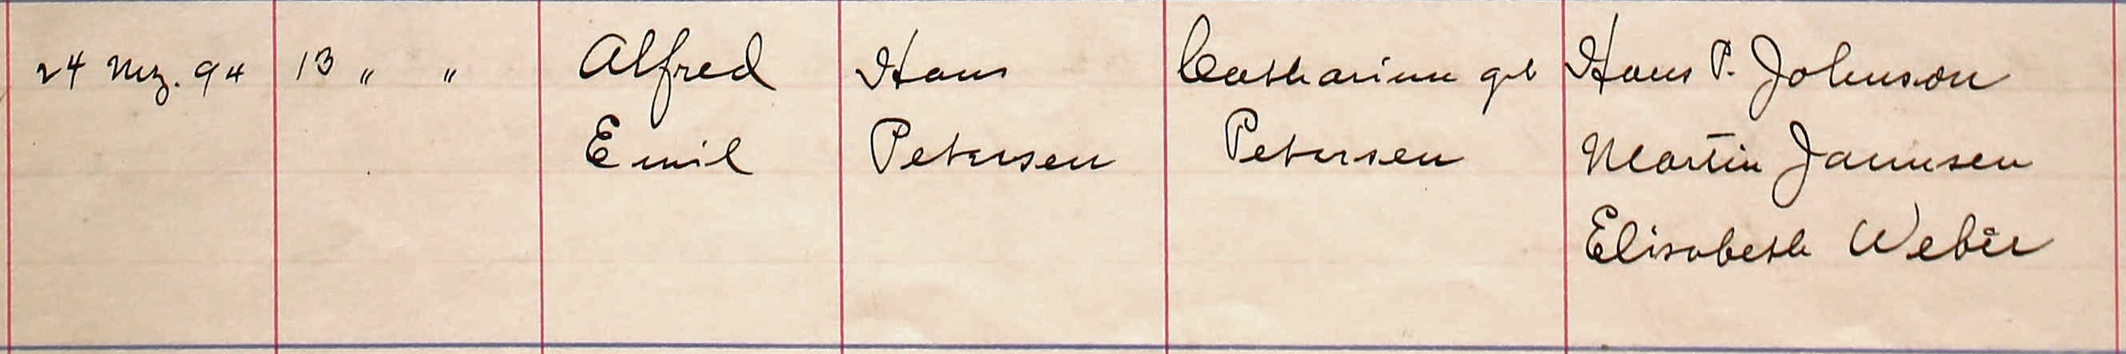 Alfred Emil Petersen baptism 1894